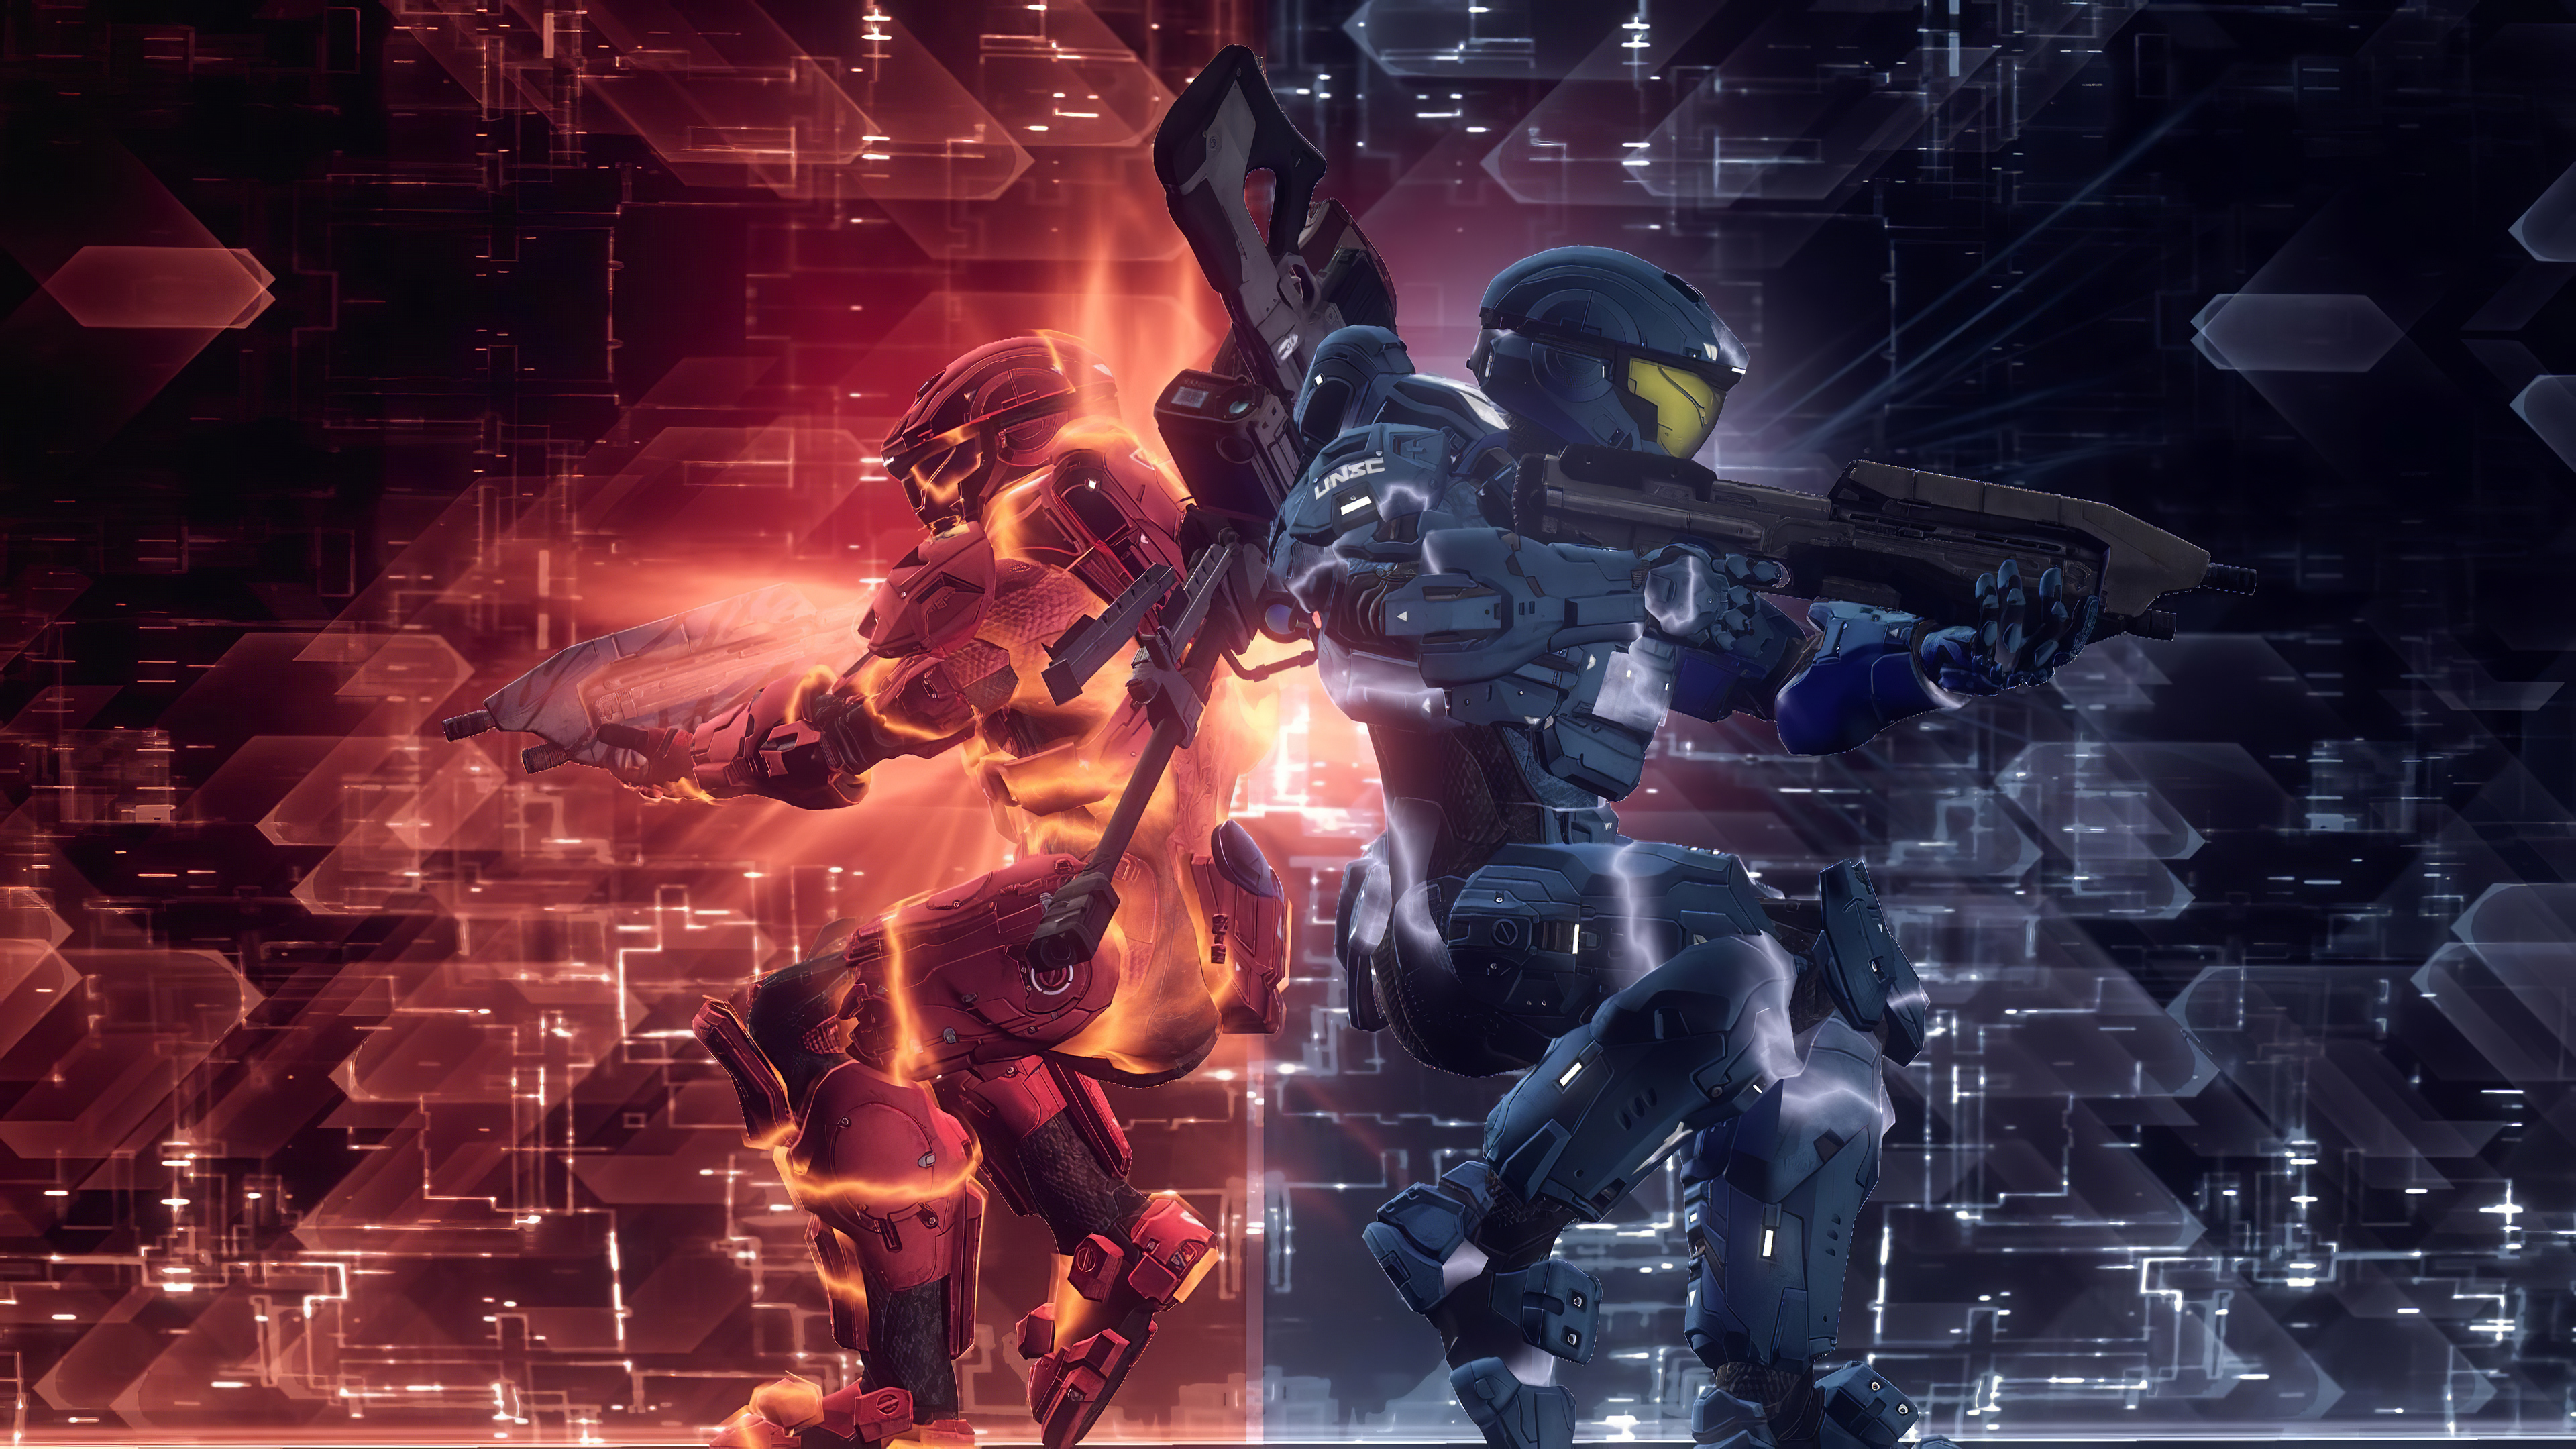 Video Games Video Game Art Digital Art Fan Art Halo Halo 4 Futuristic Armor Soldier UNSC Spartans Ha 3840x2160